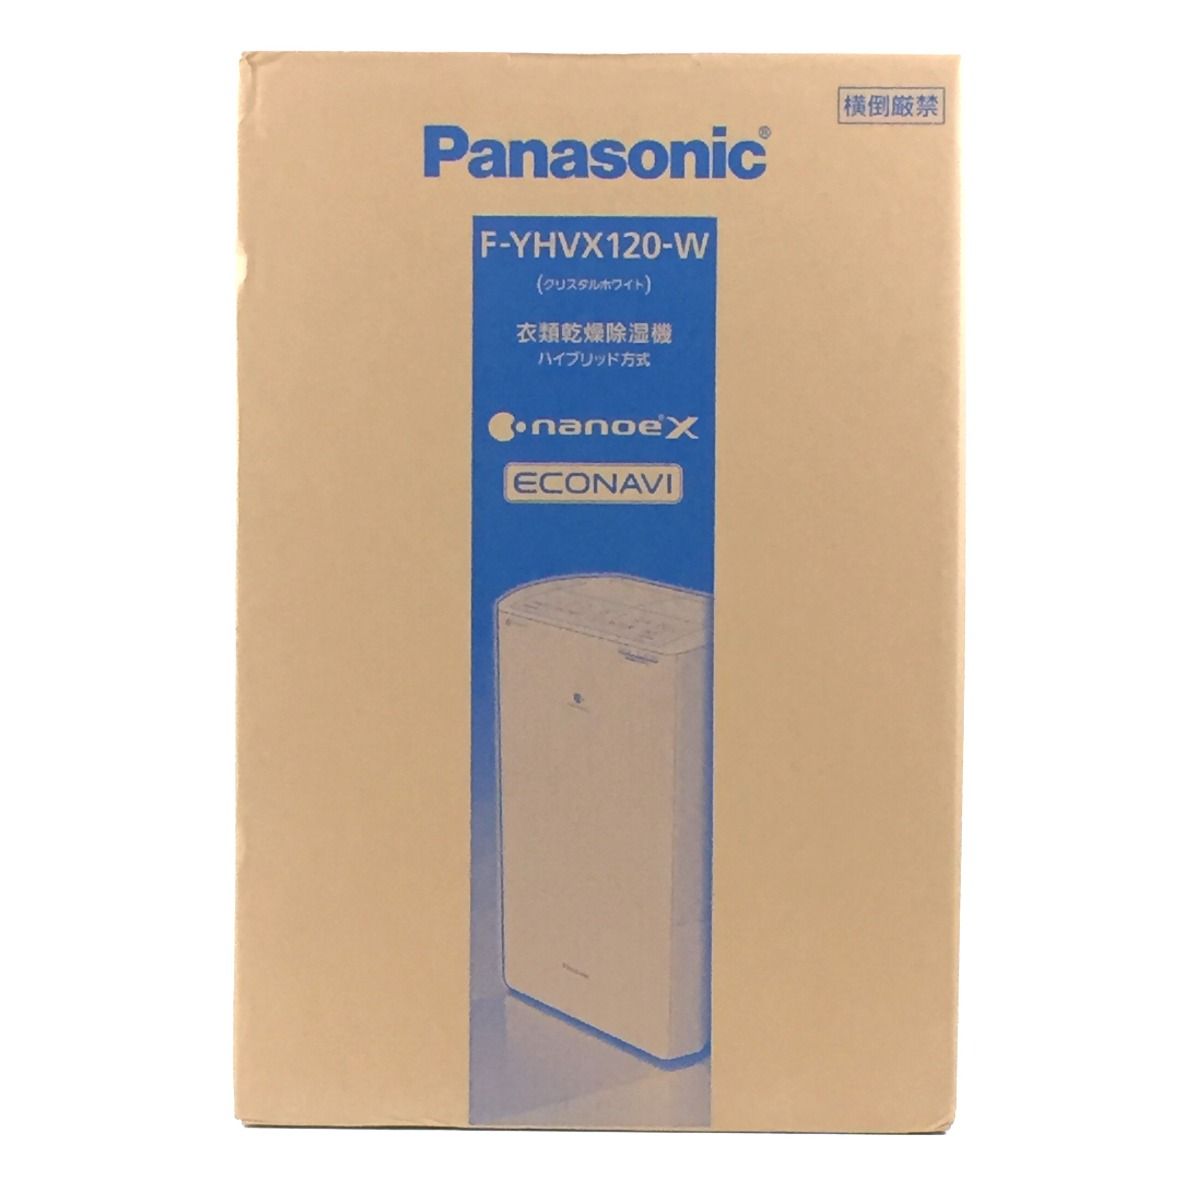 WHITE F-YHVX120-W Panasonic - 2